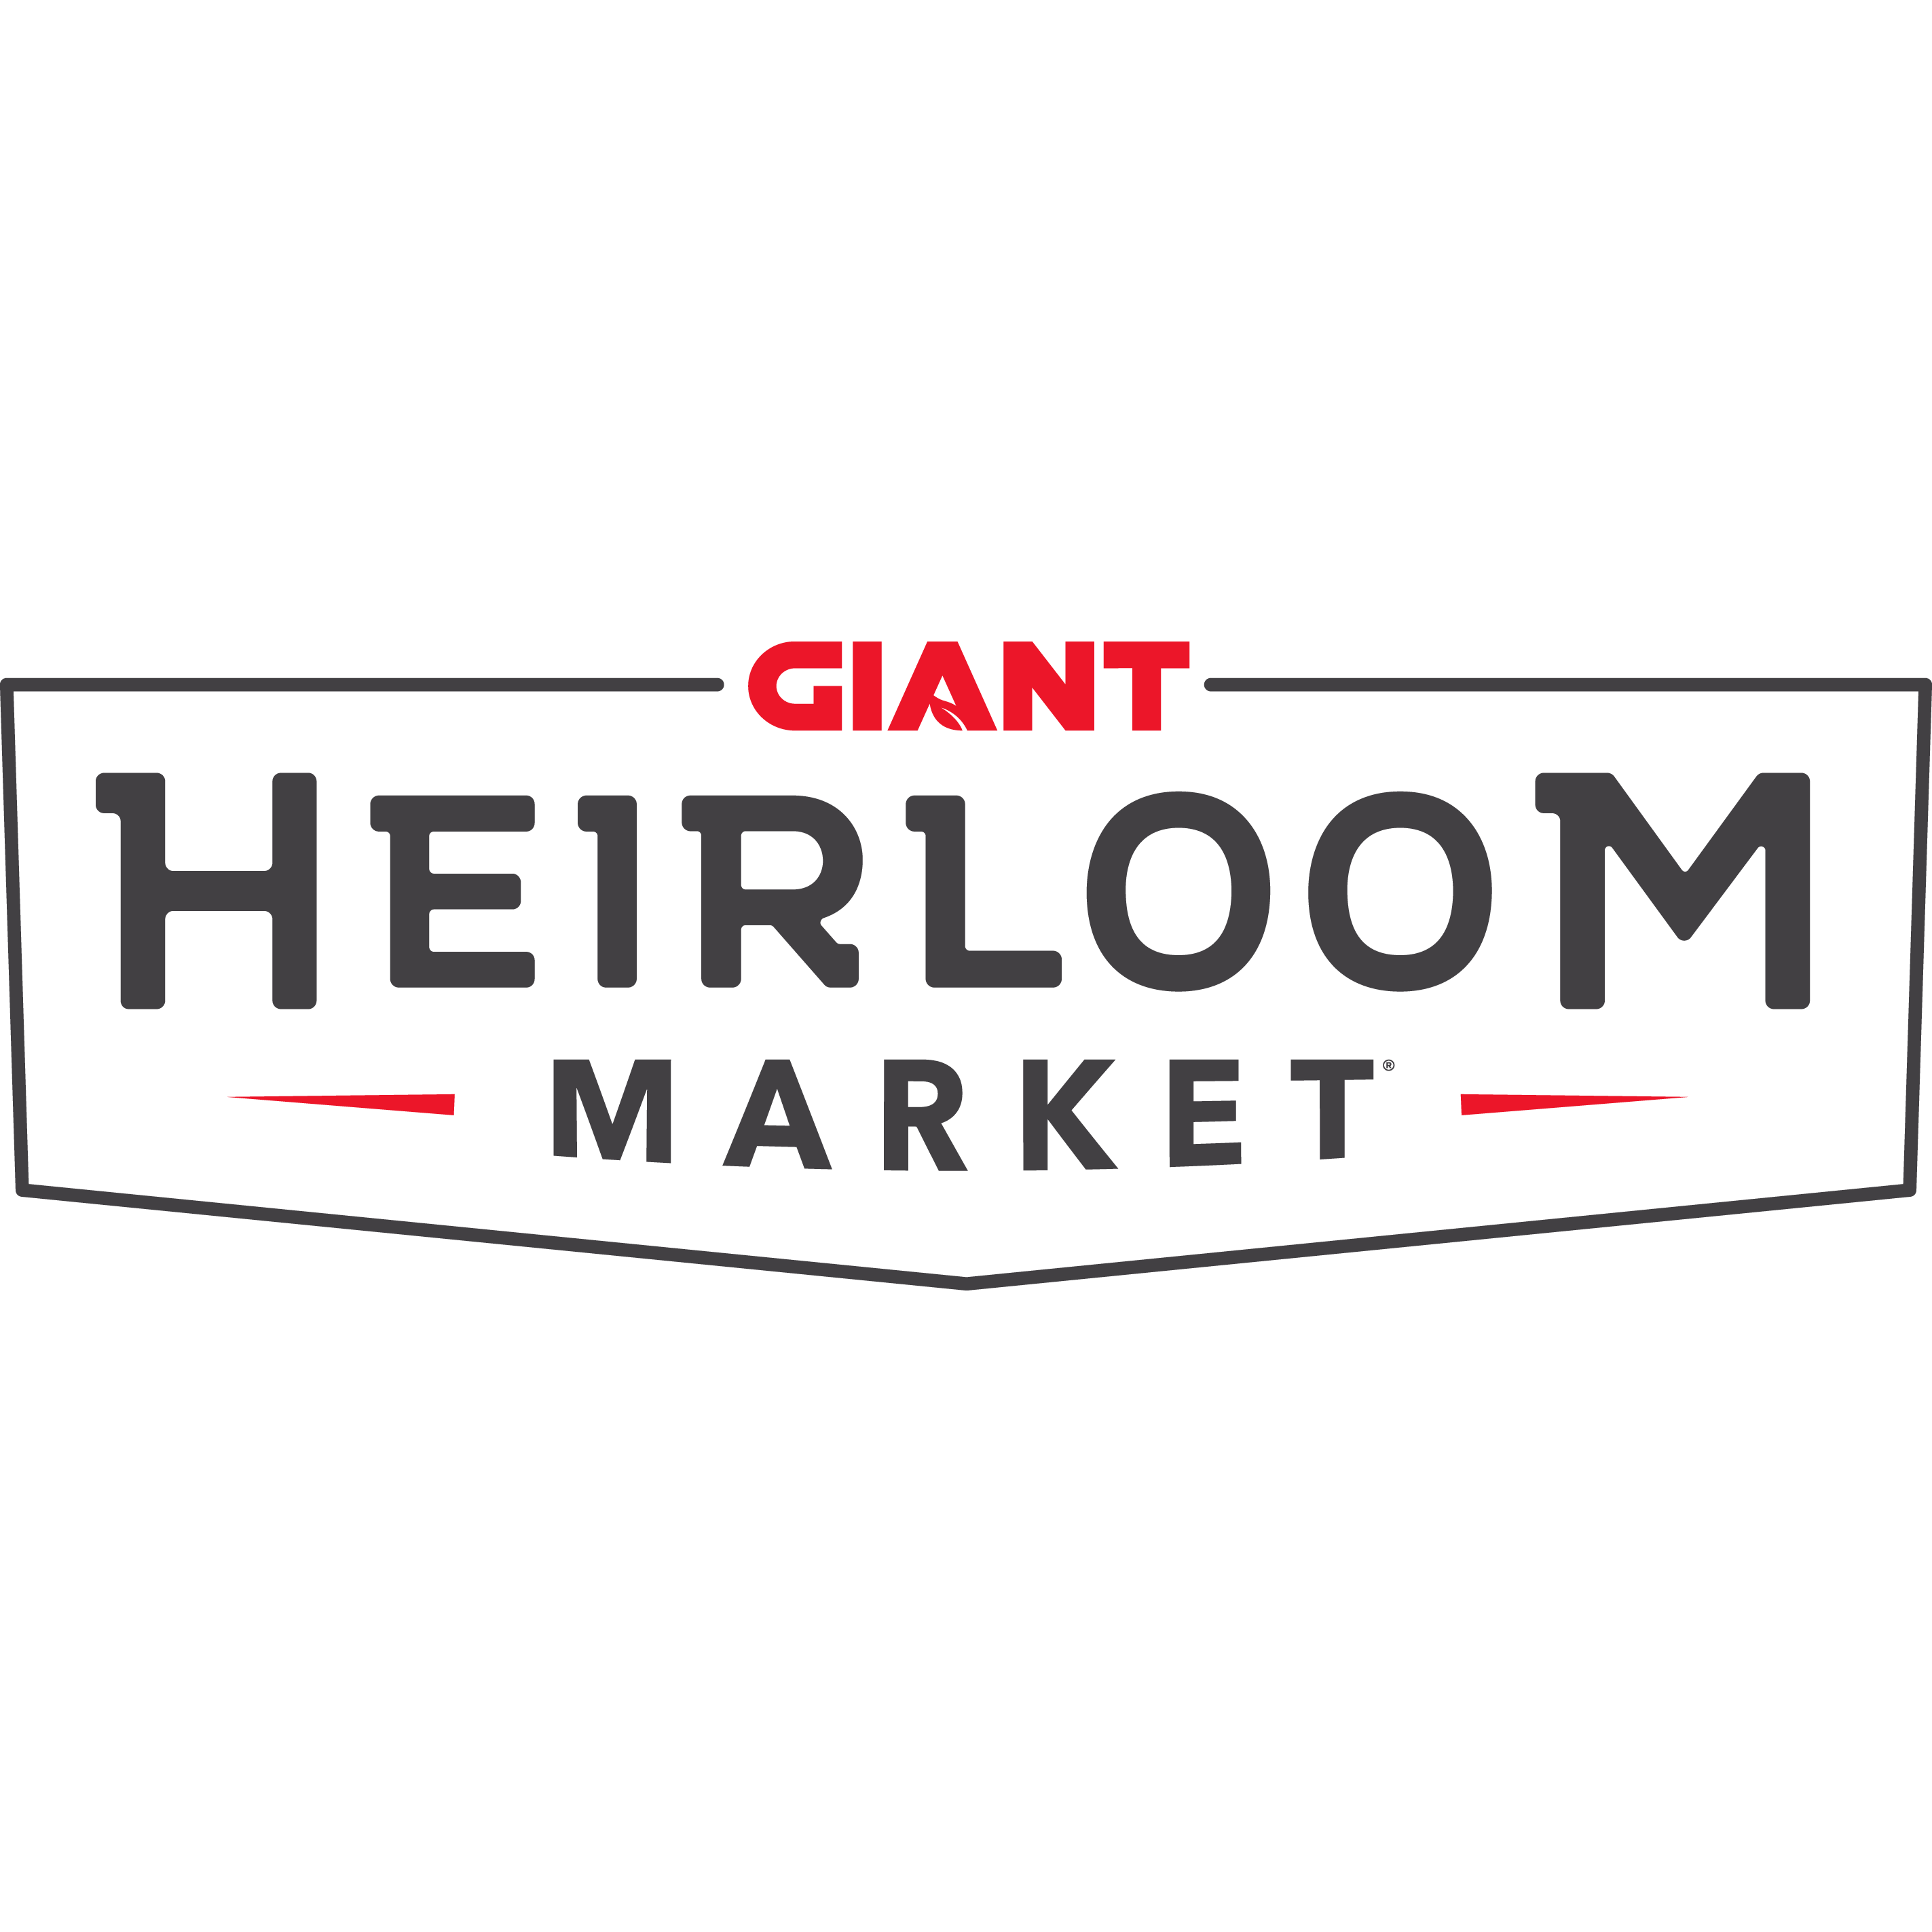 GIANT Heirloom Market